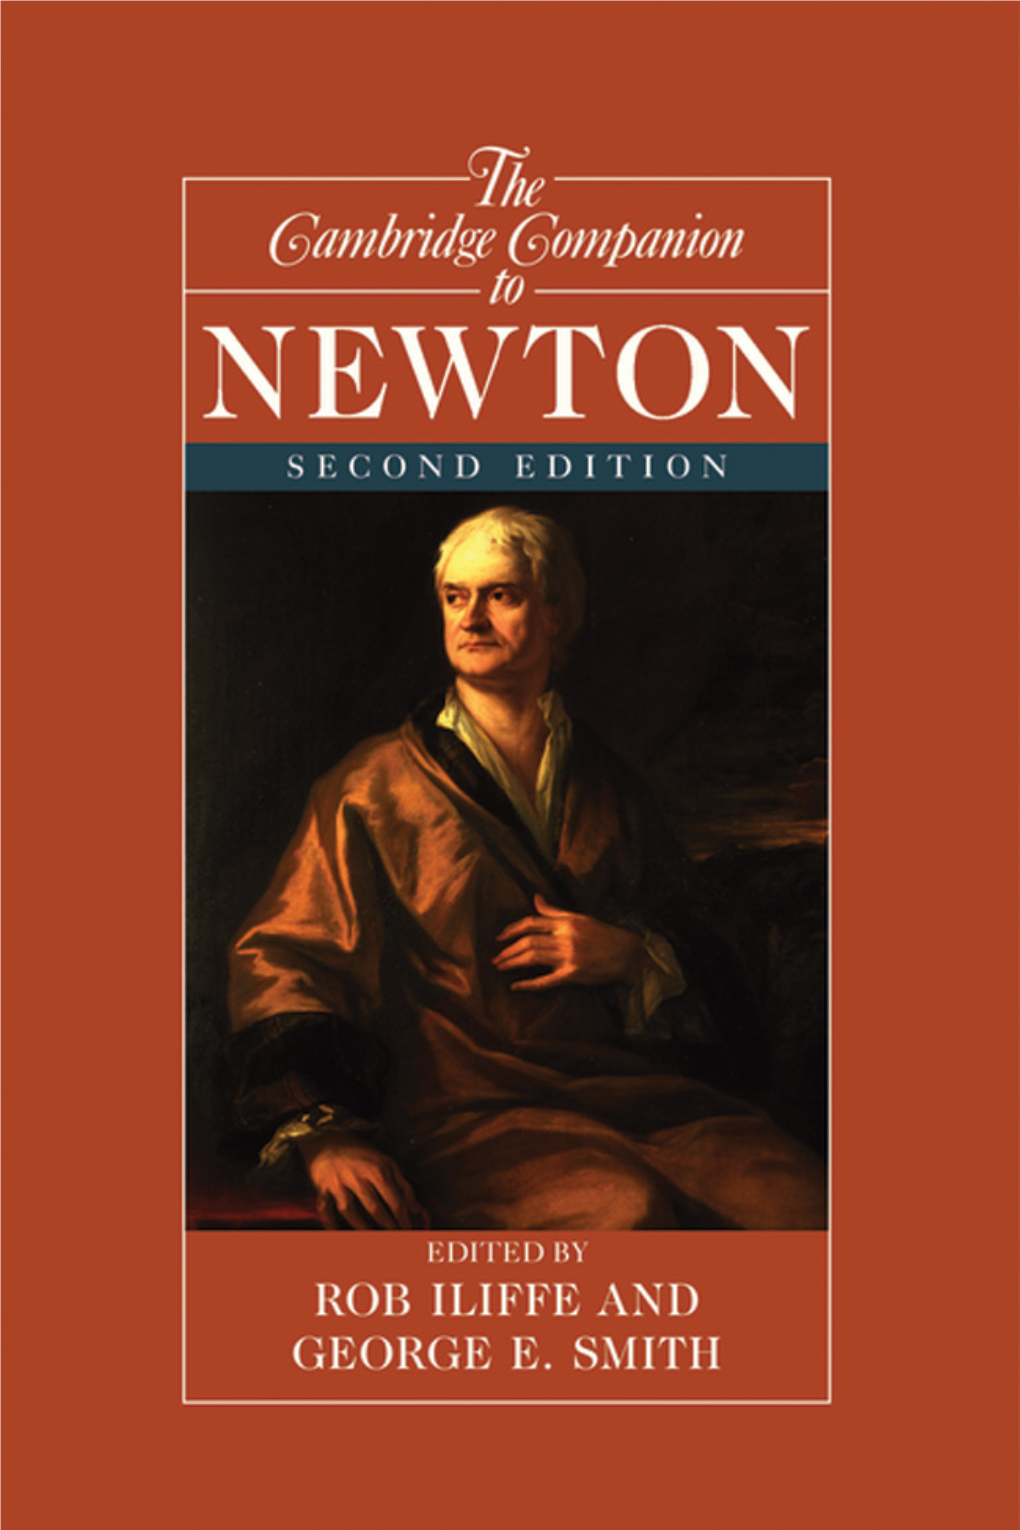 A Brief Introduction to the Mathematical Work of Isaac Newton 382 Niccolò Guicciardini